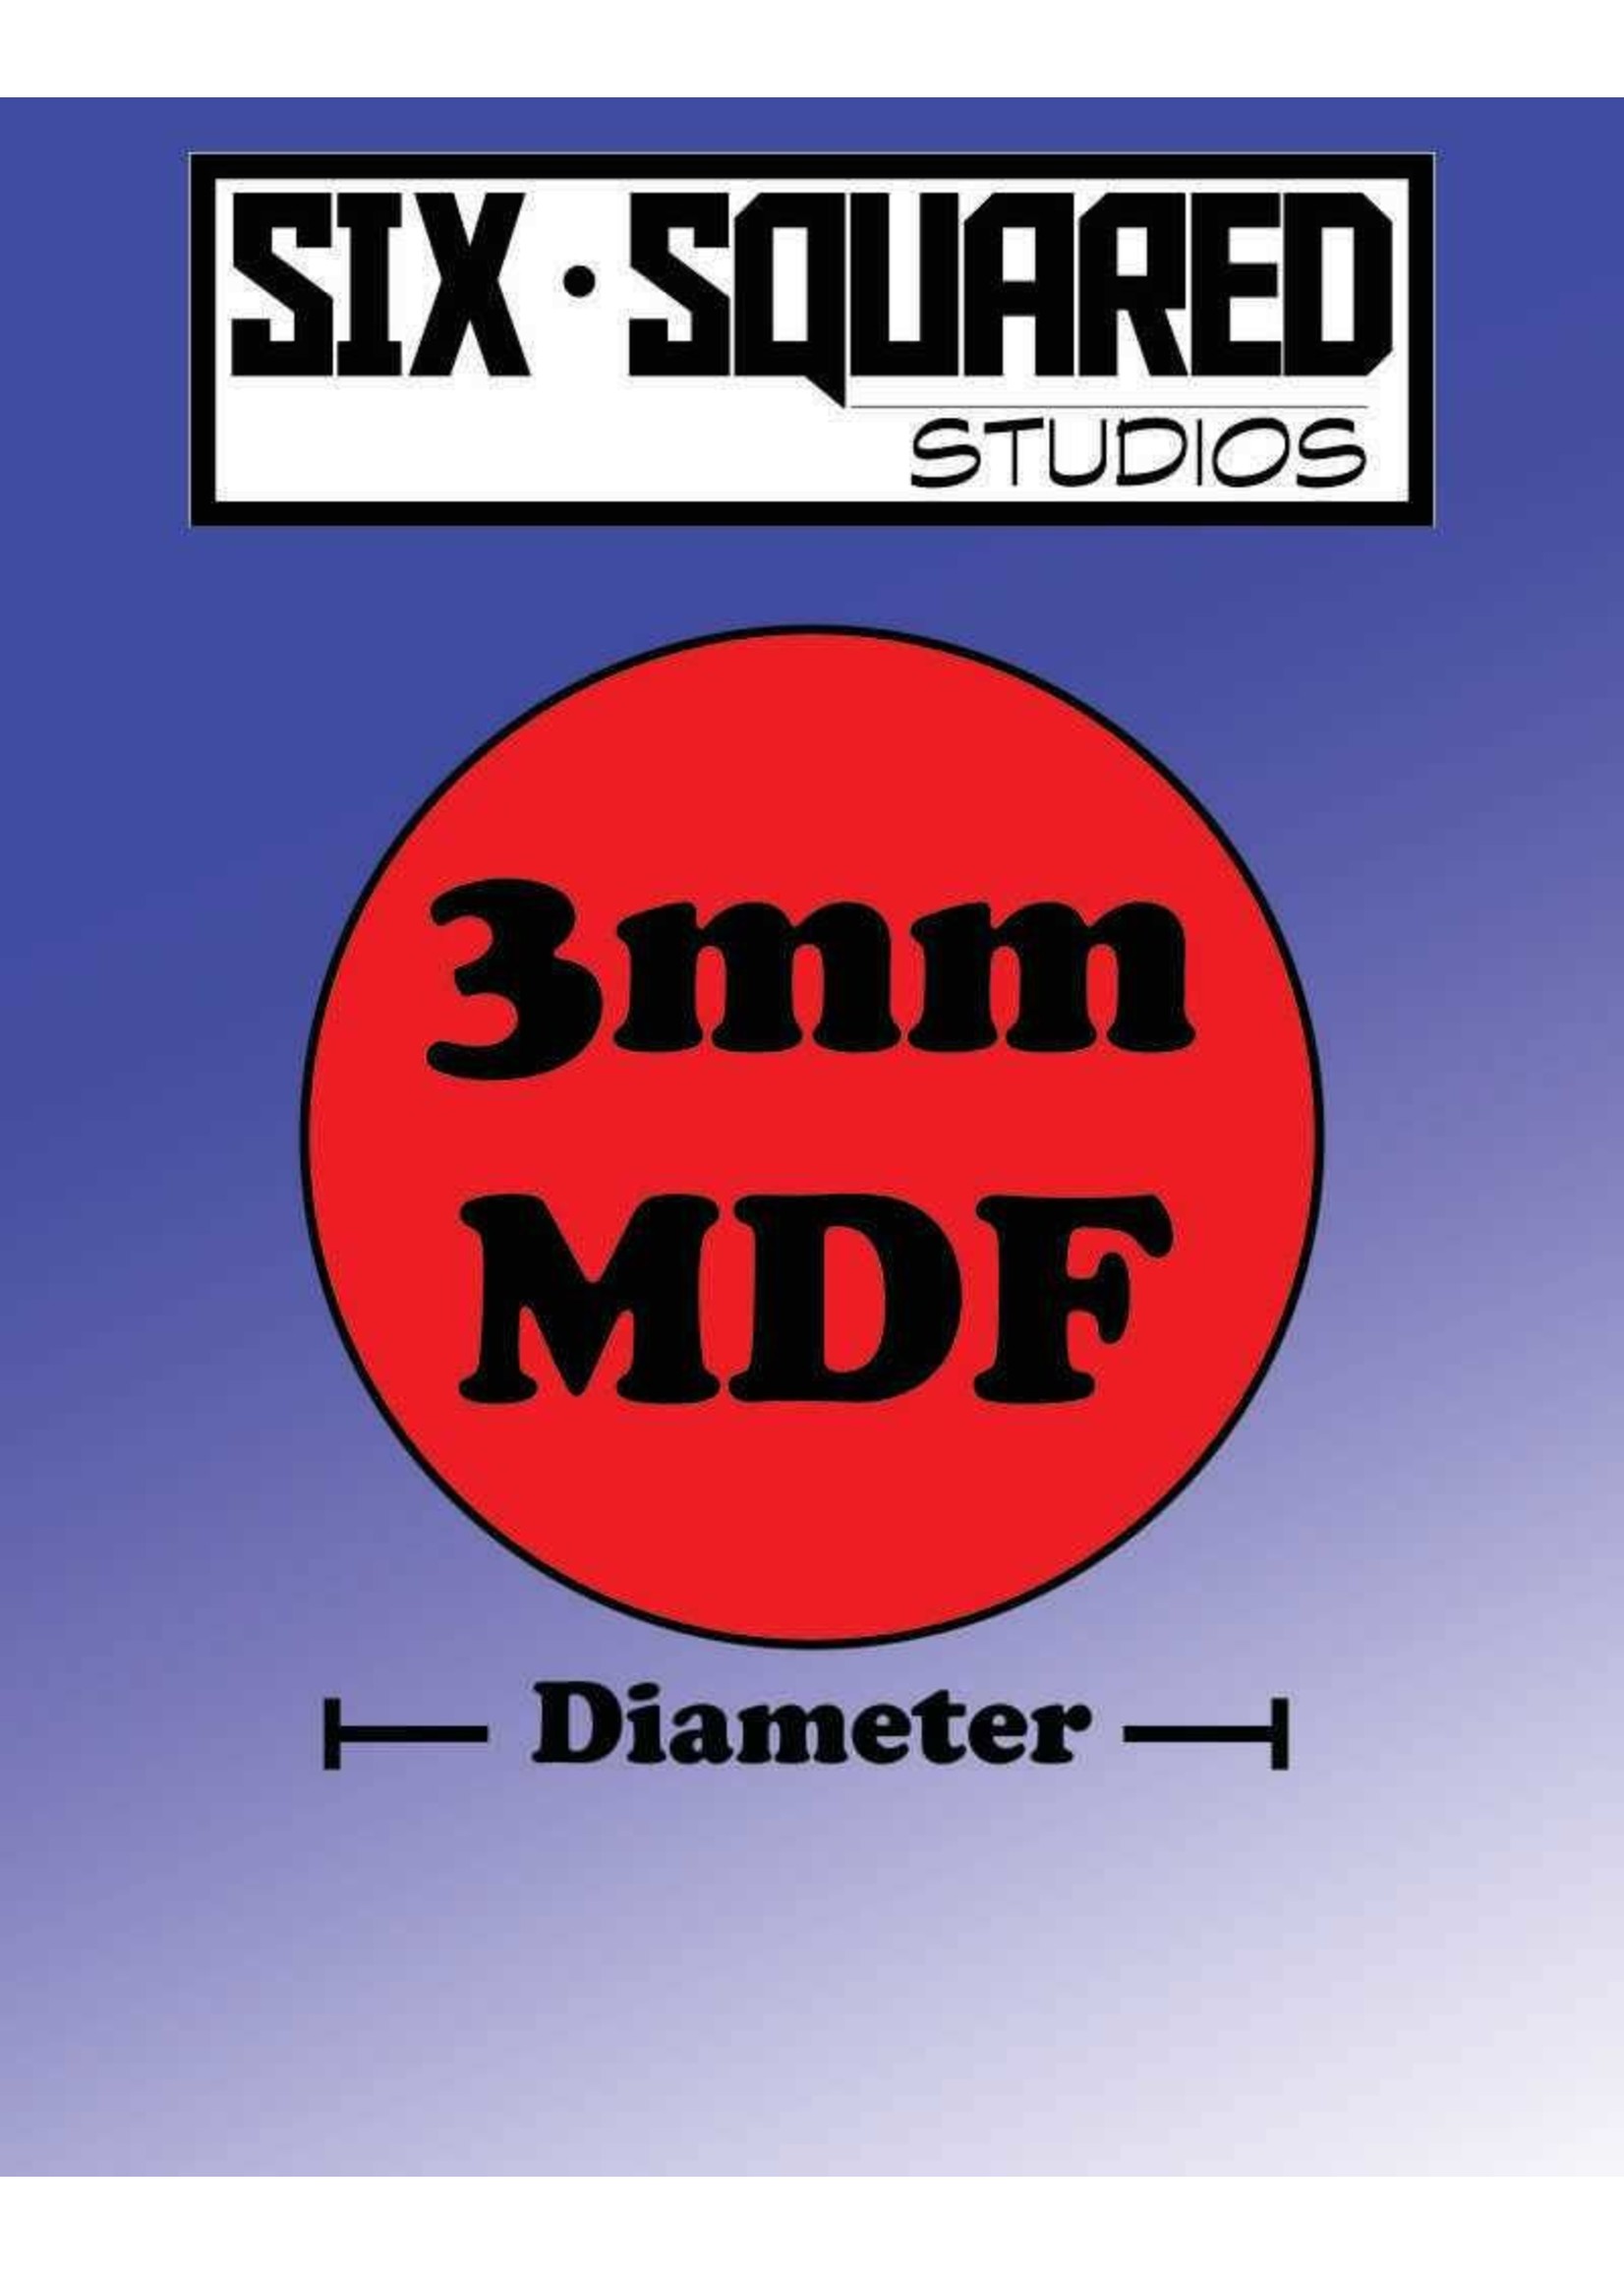 6 Squared Studios 80mm MDF round bases